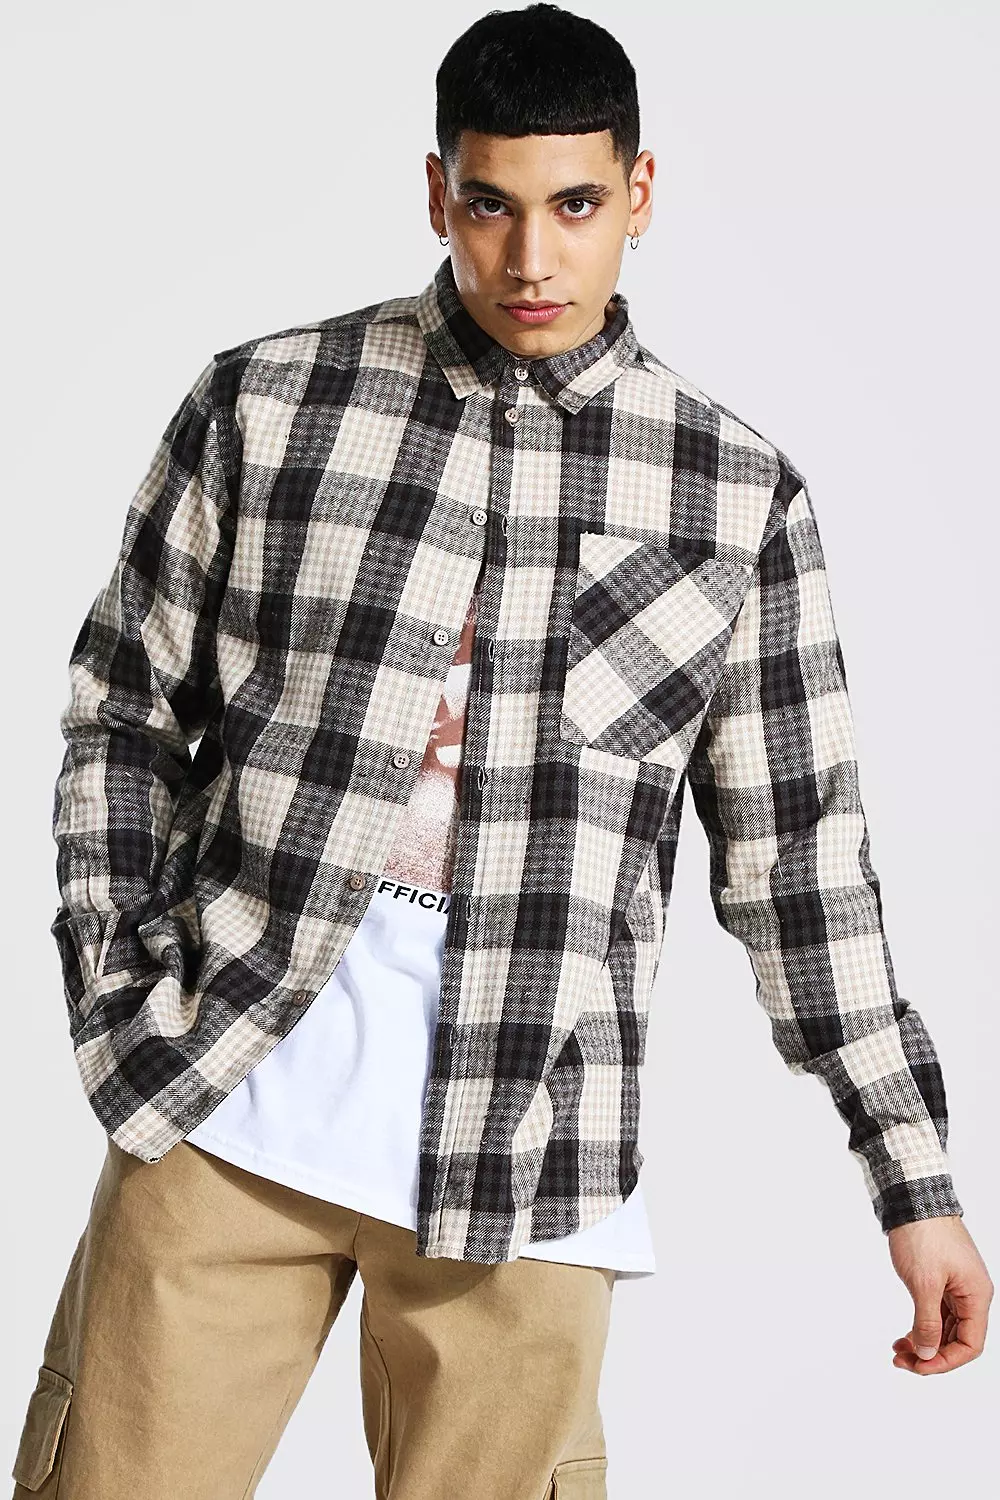 Urban Daizy Oversized Flannel Plaid Shirt Medium